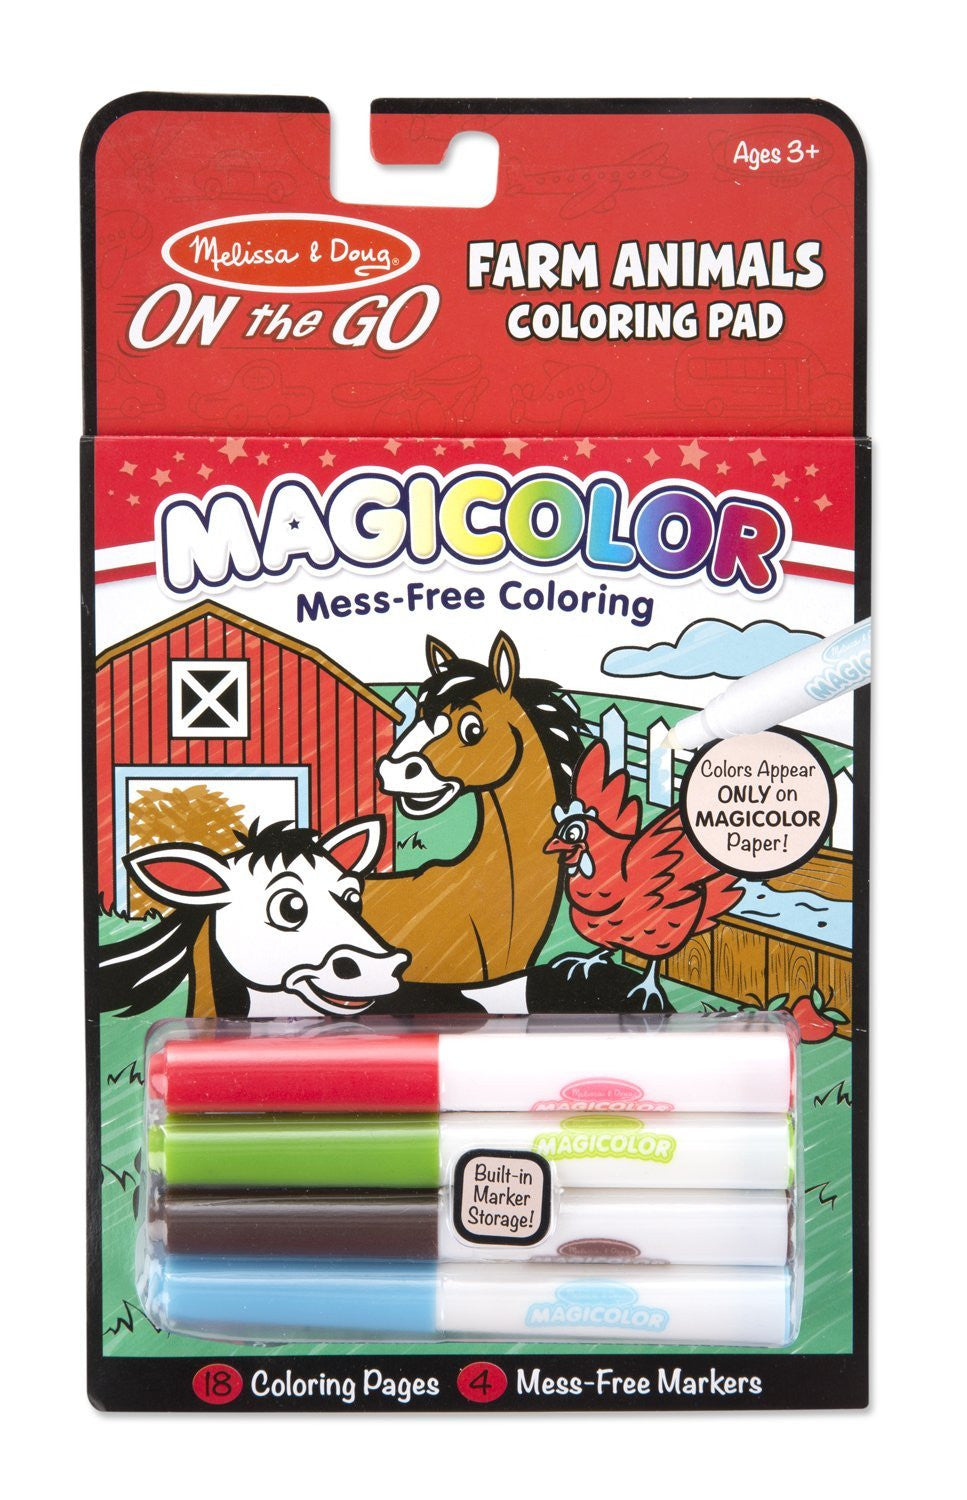 Melissa Doug Magicolor Coloring Pad - Farm Animals 9126